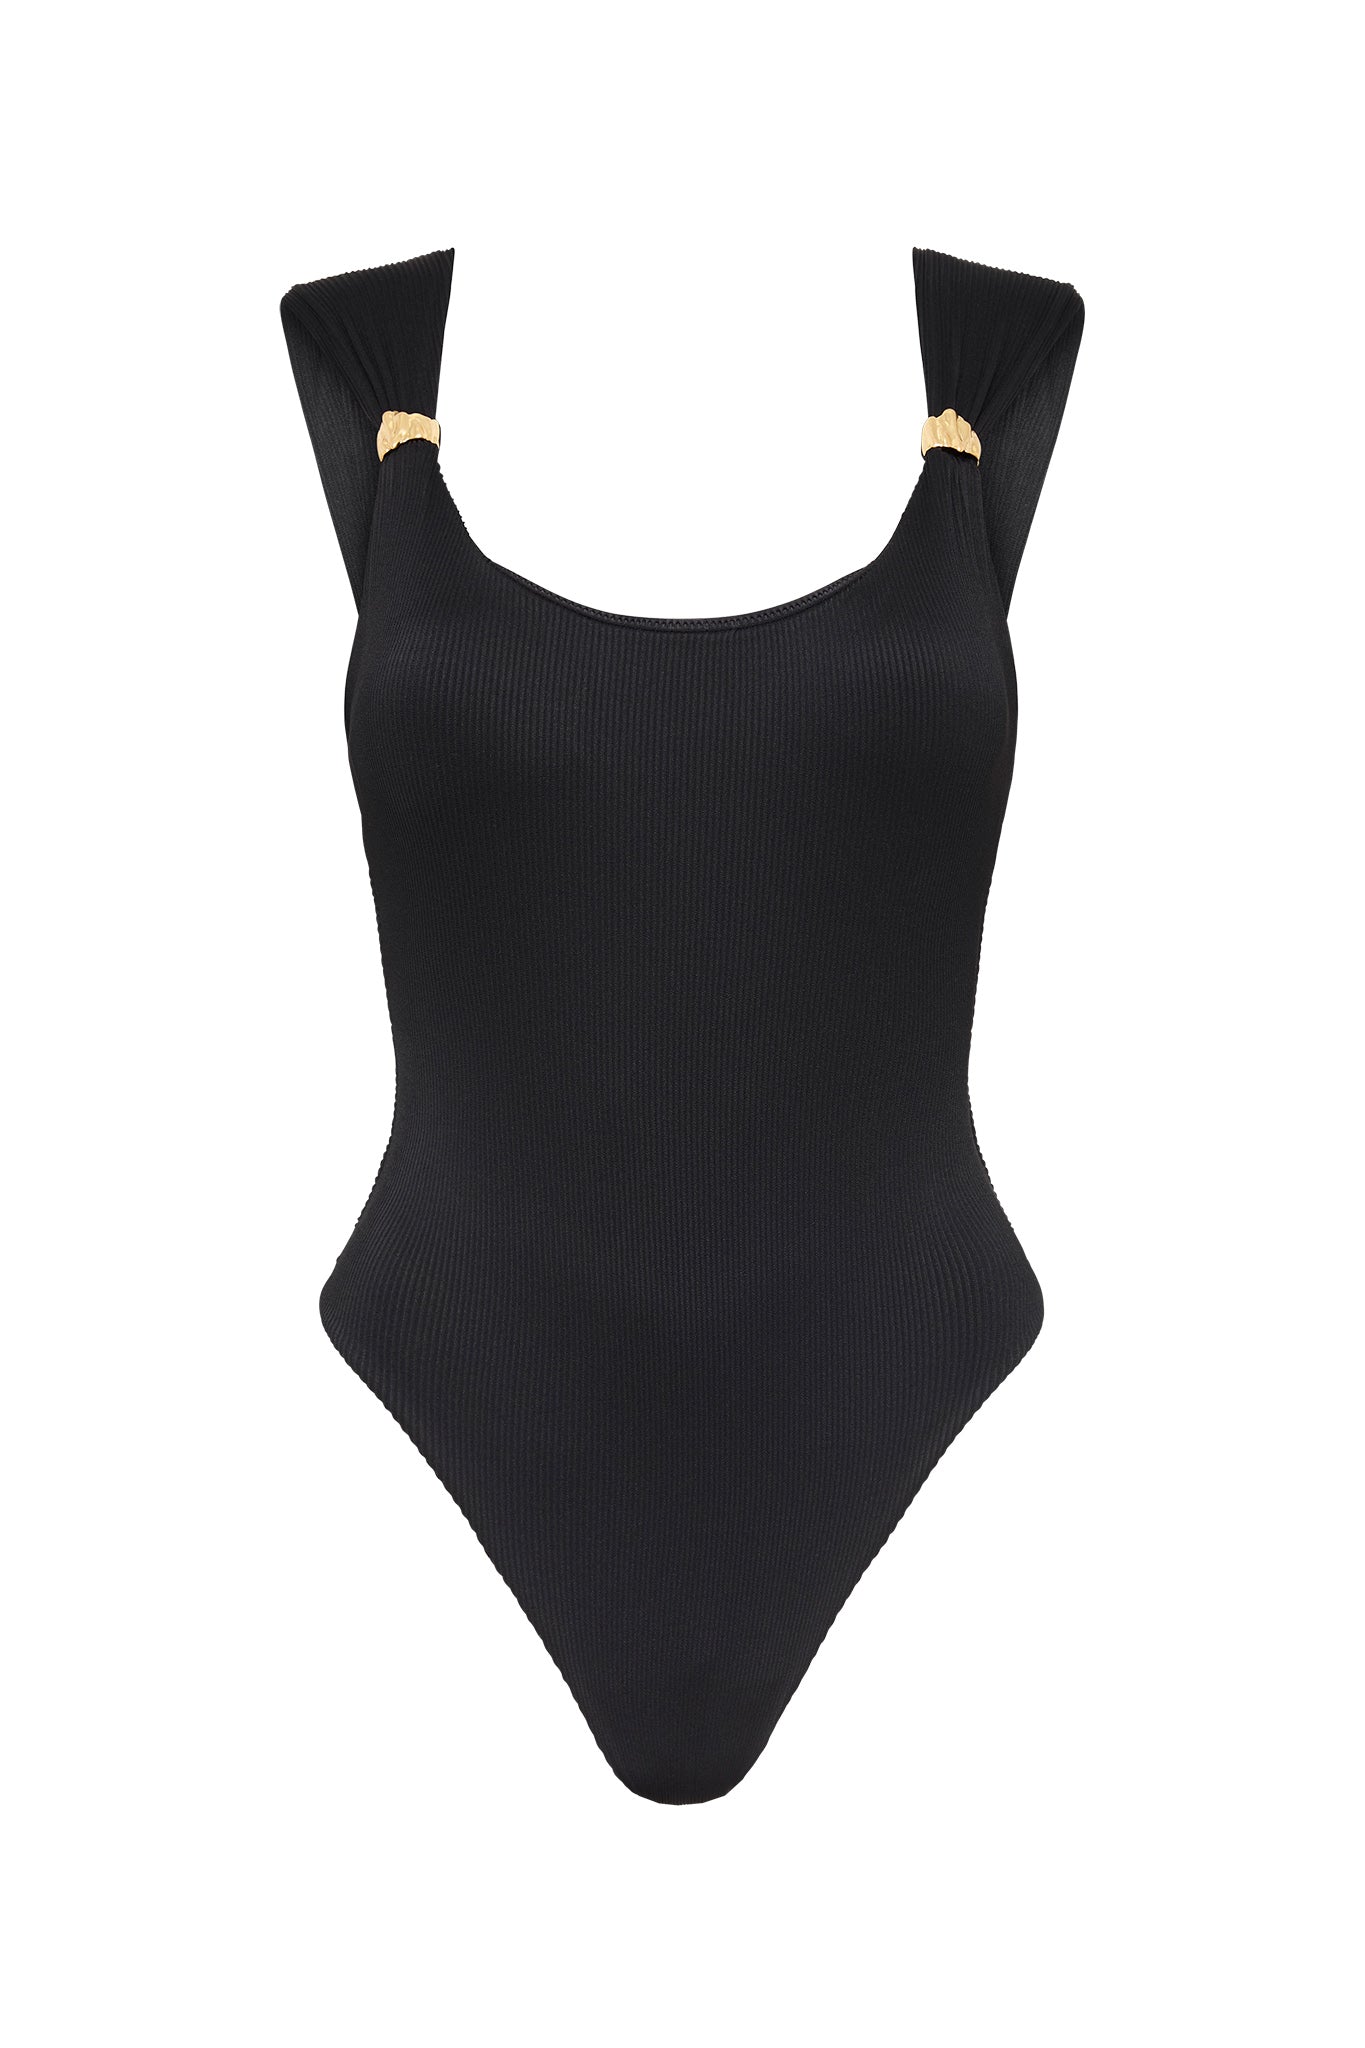 AMOROUS Black One-Piece Swimsuit  Square Neckline & Slim Straps